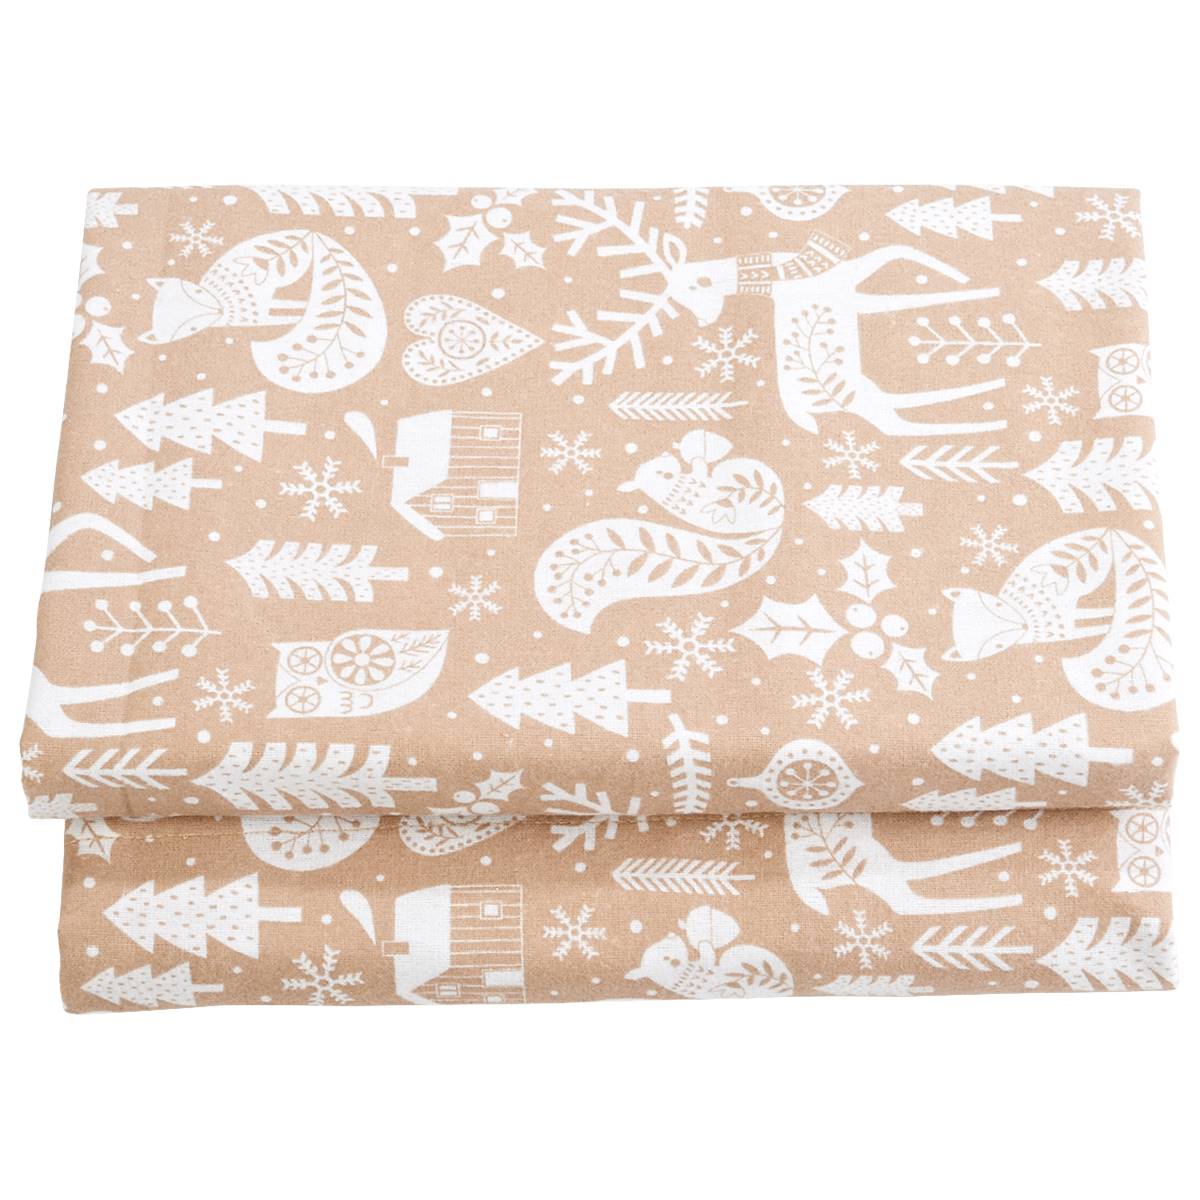 Ashley Cooper(tm) Forest Holiday Flannel Sheet Set